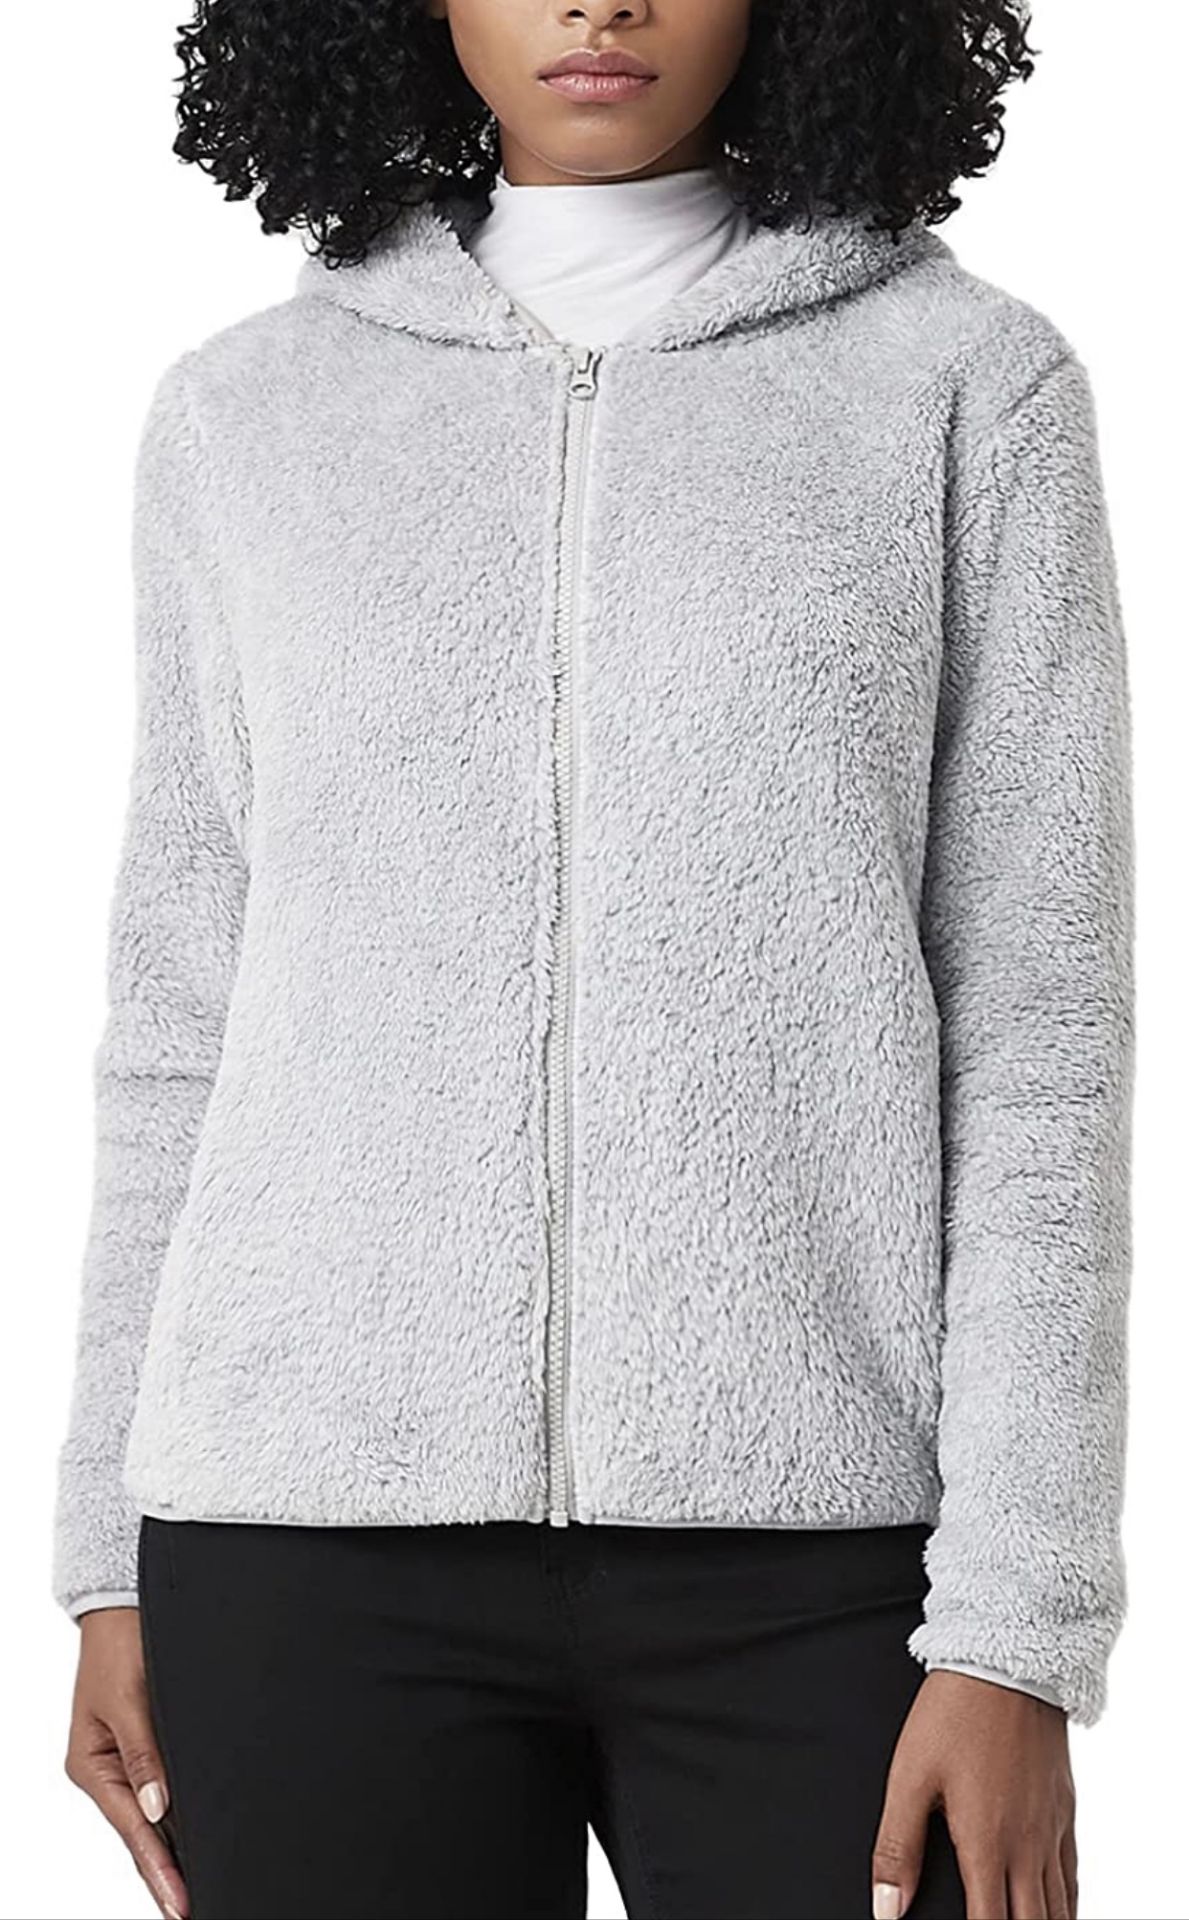 RRP £27.99 Lapasa Women's Anti-Static Polar Fleece Jacket Lightweight, Medium